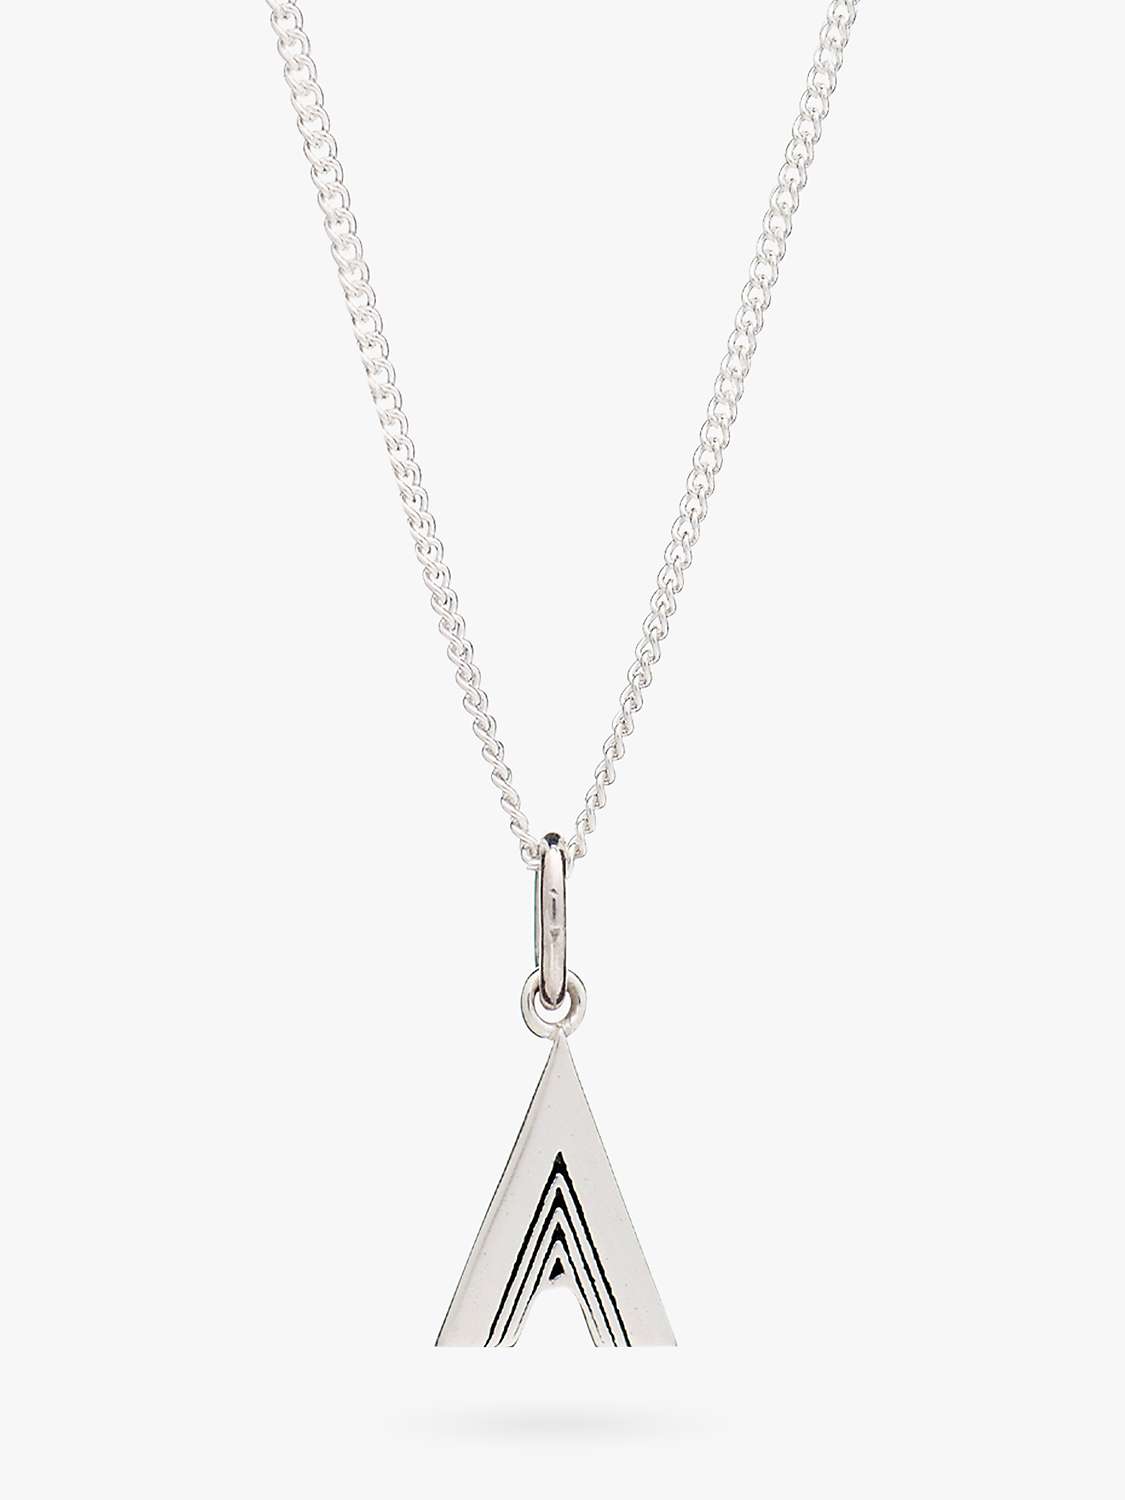 Buy Rachel Jackson London Initial Necklace, Silver Online at johnlewis.com